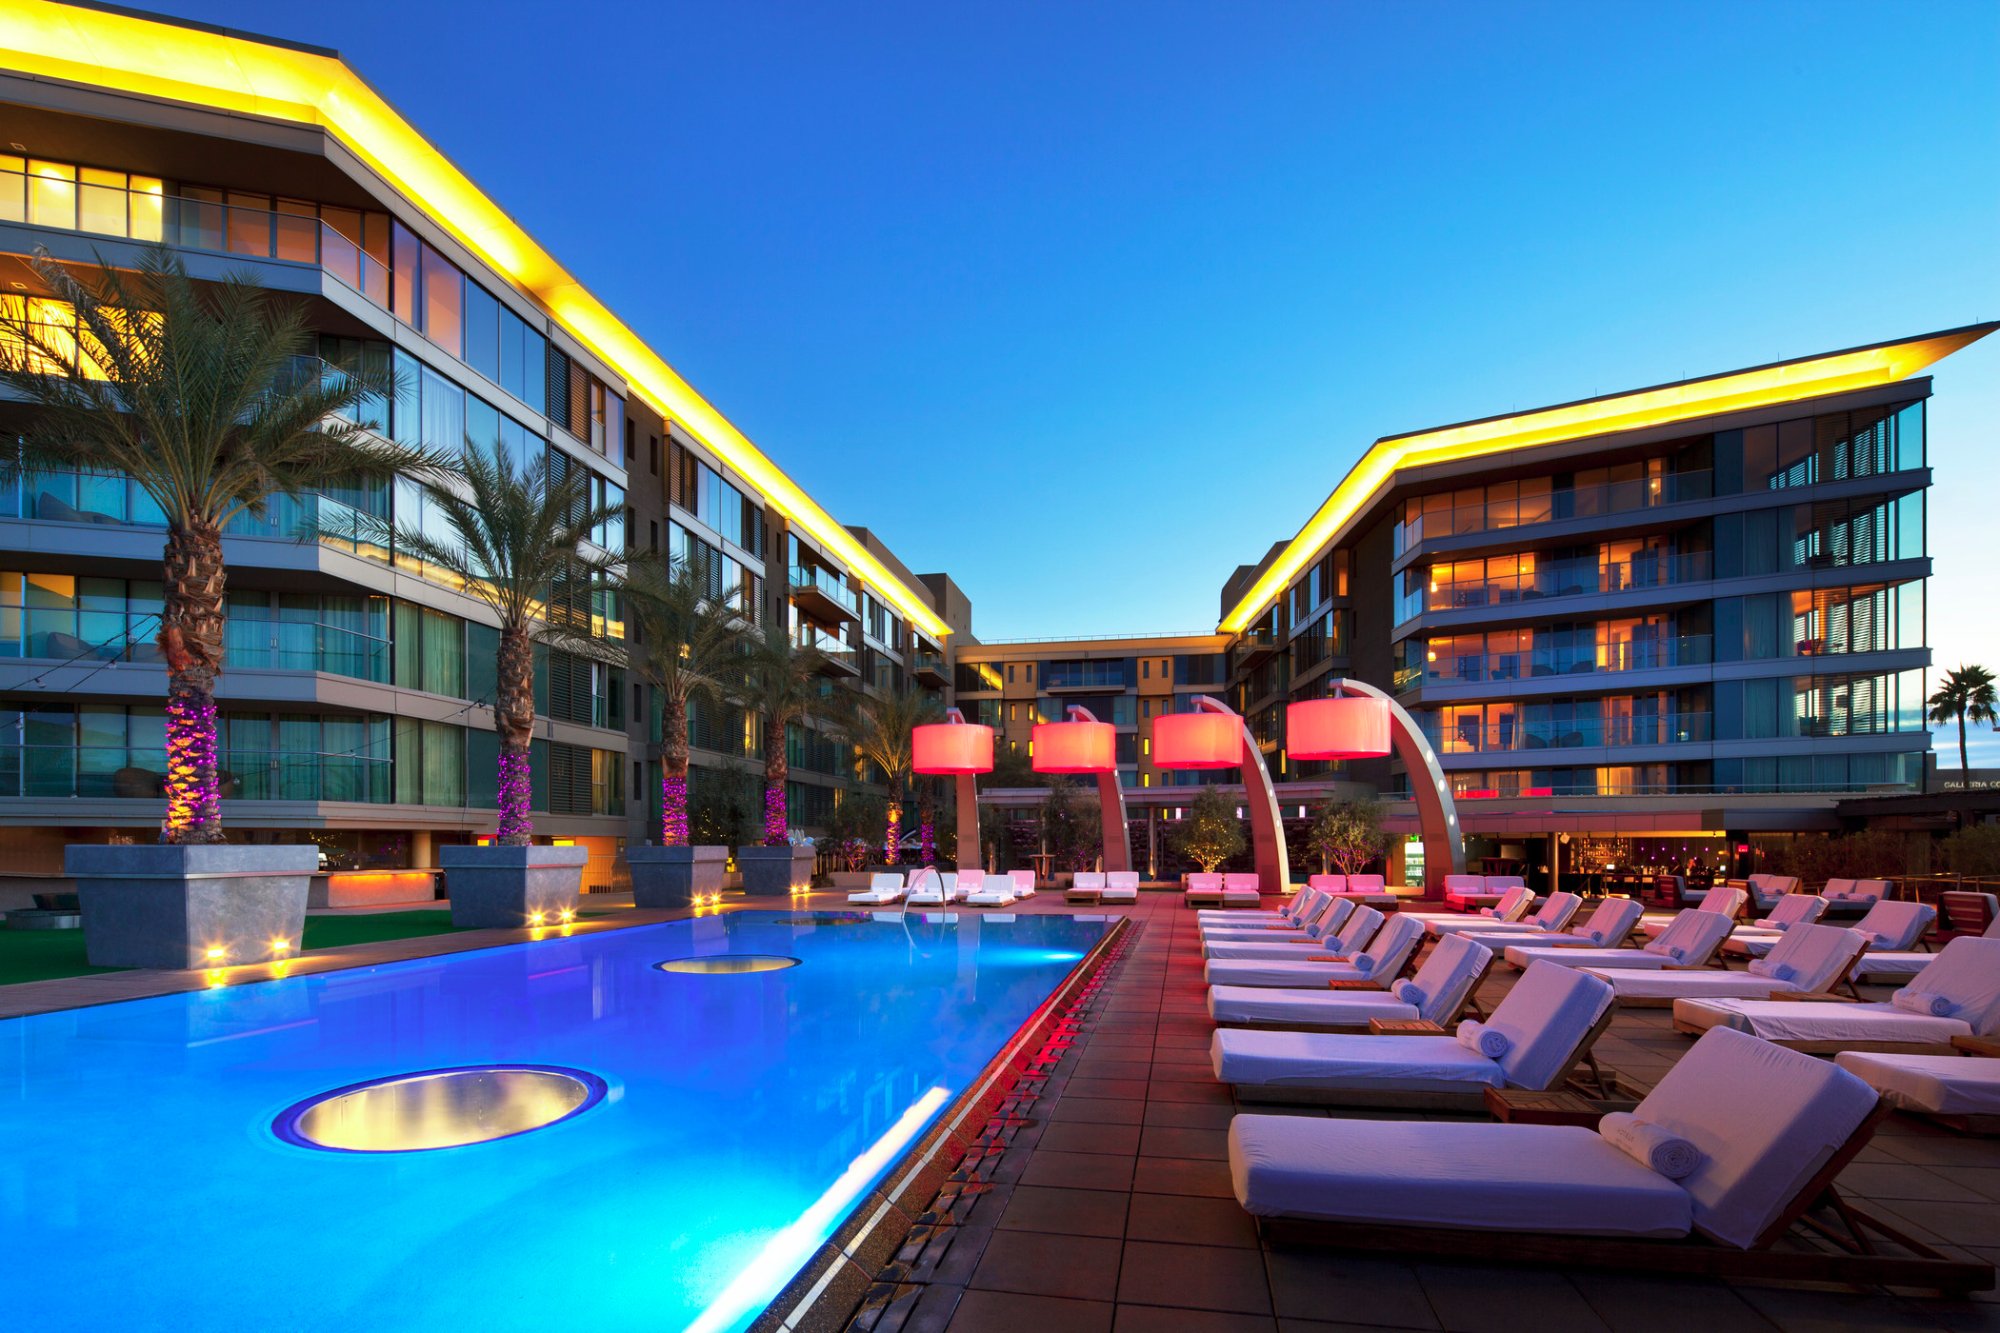 W Scottsdale Hotel - Best Pools Scottsdale